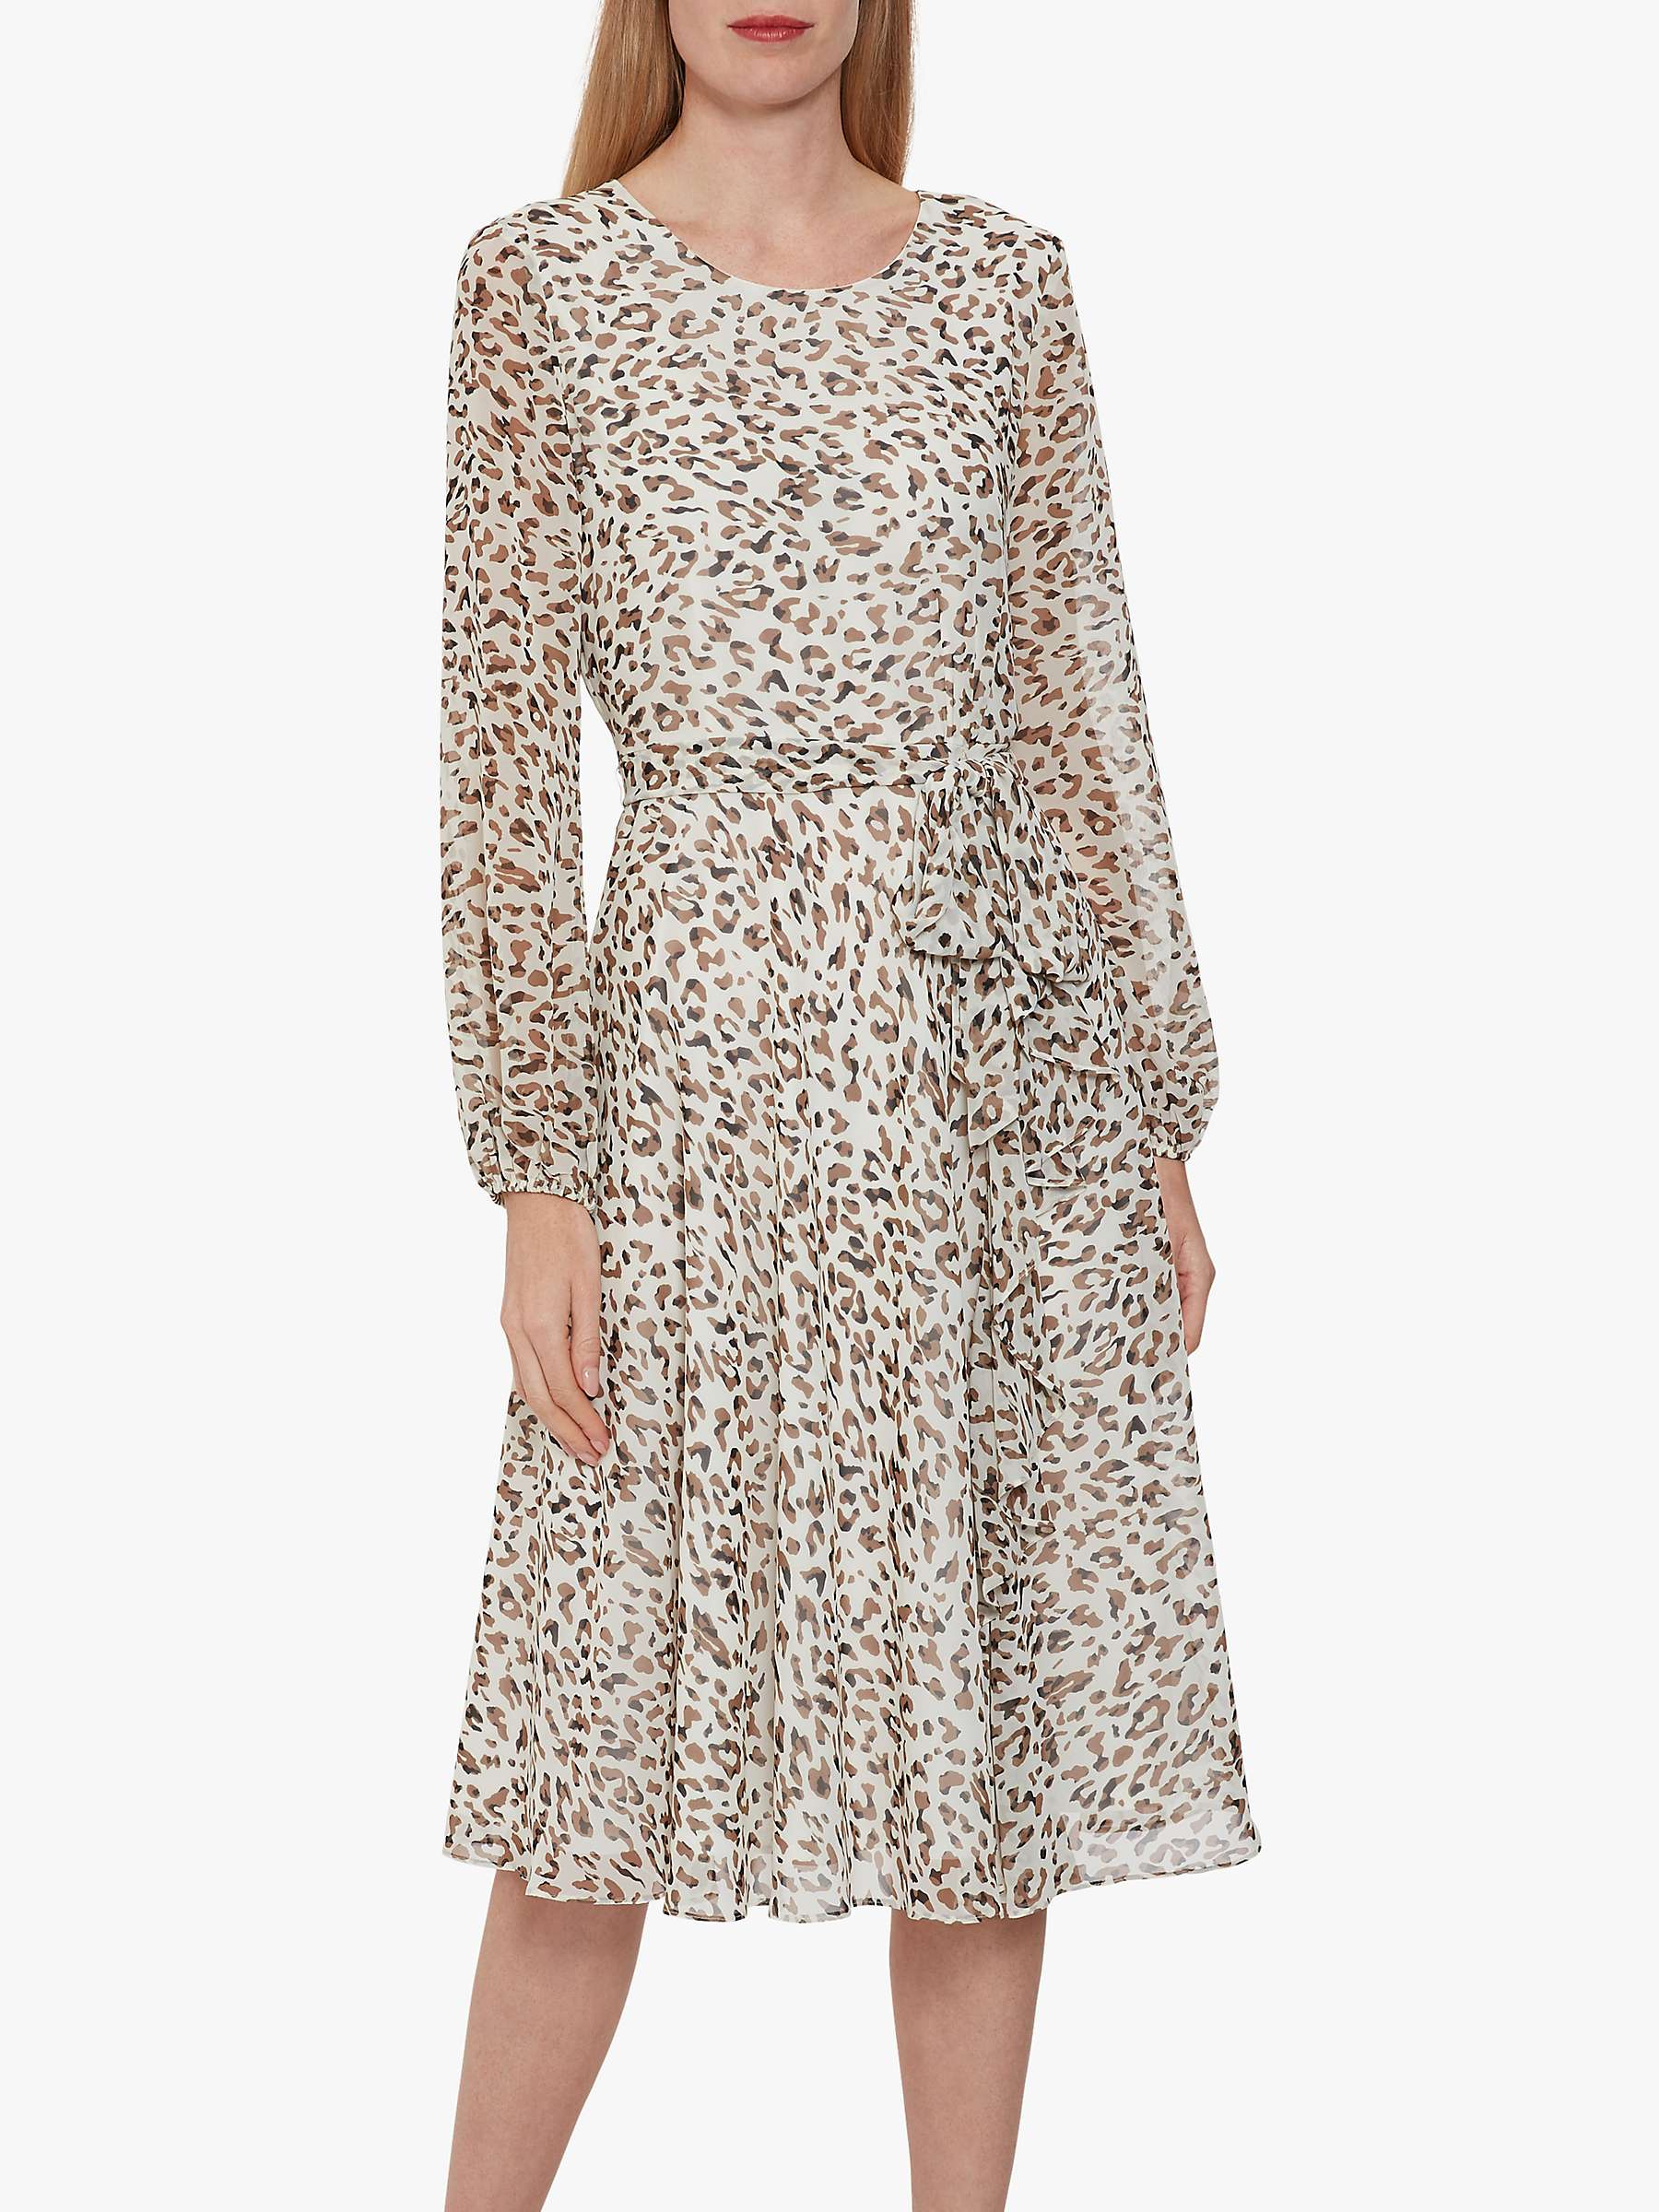 Buy Gina Bacconi Jerilyn Animal Knee Length Dress, Ivory/Black Online at johnlewis.com